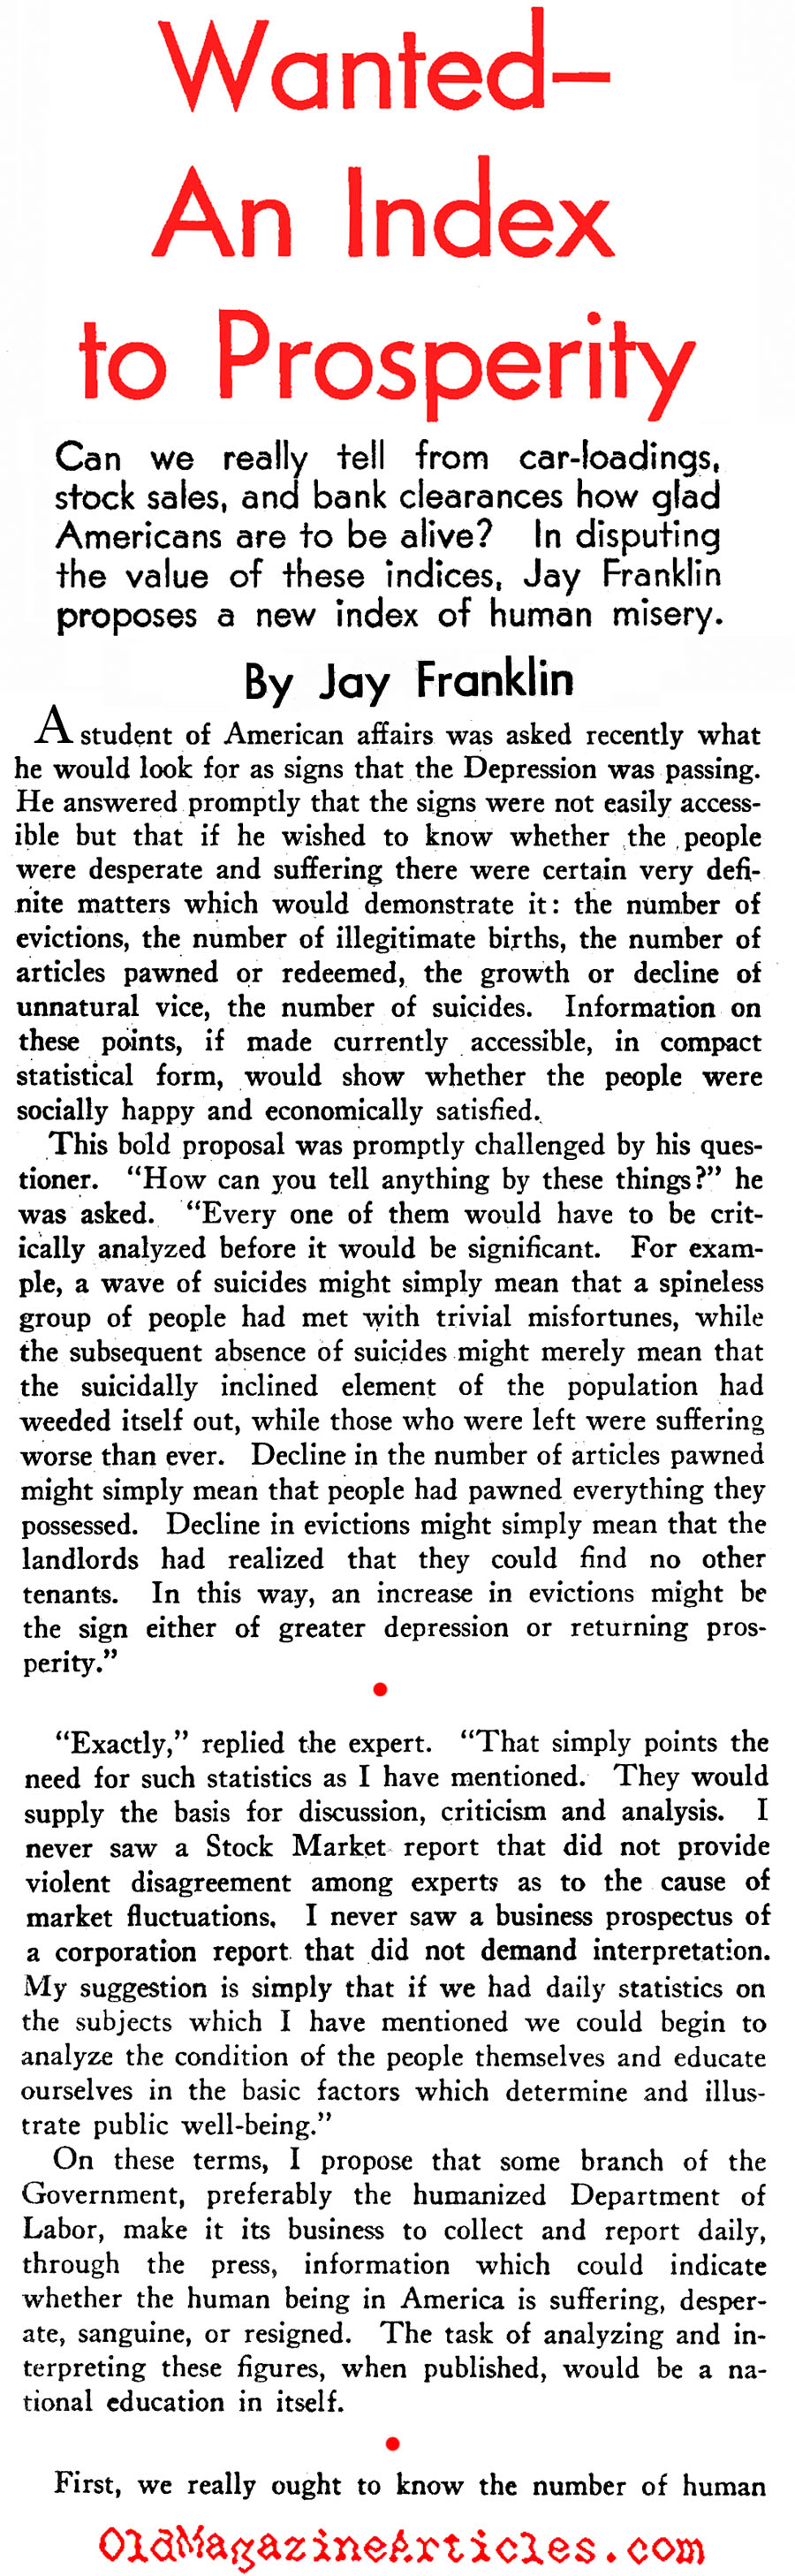 Establishing A Misery Index  (New Outlook Magazine, 1933)